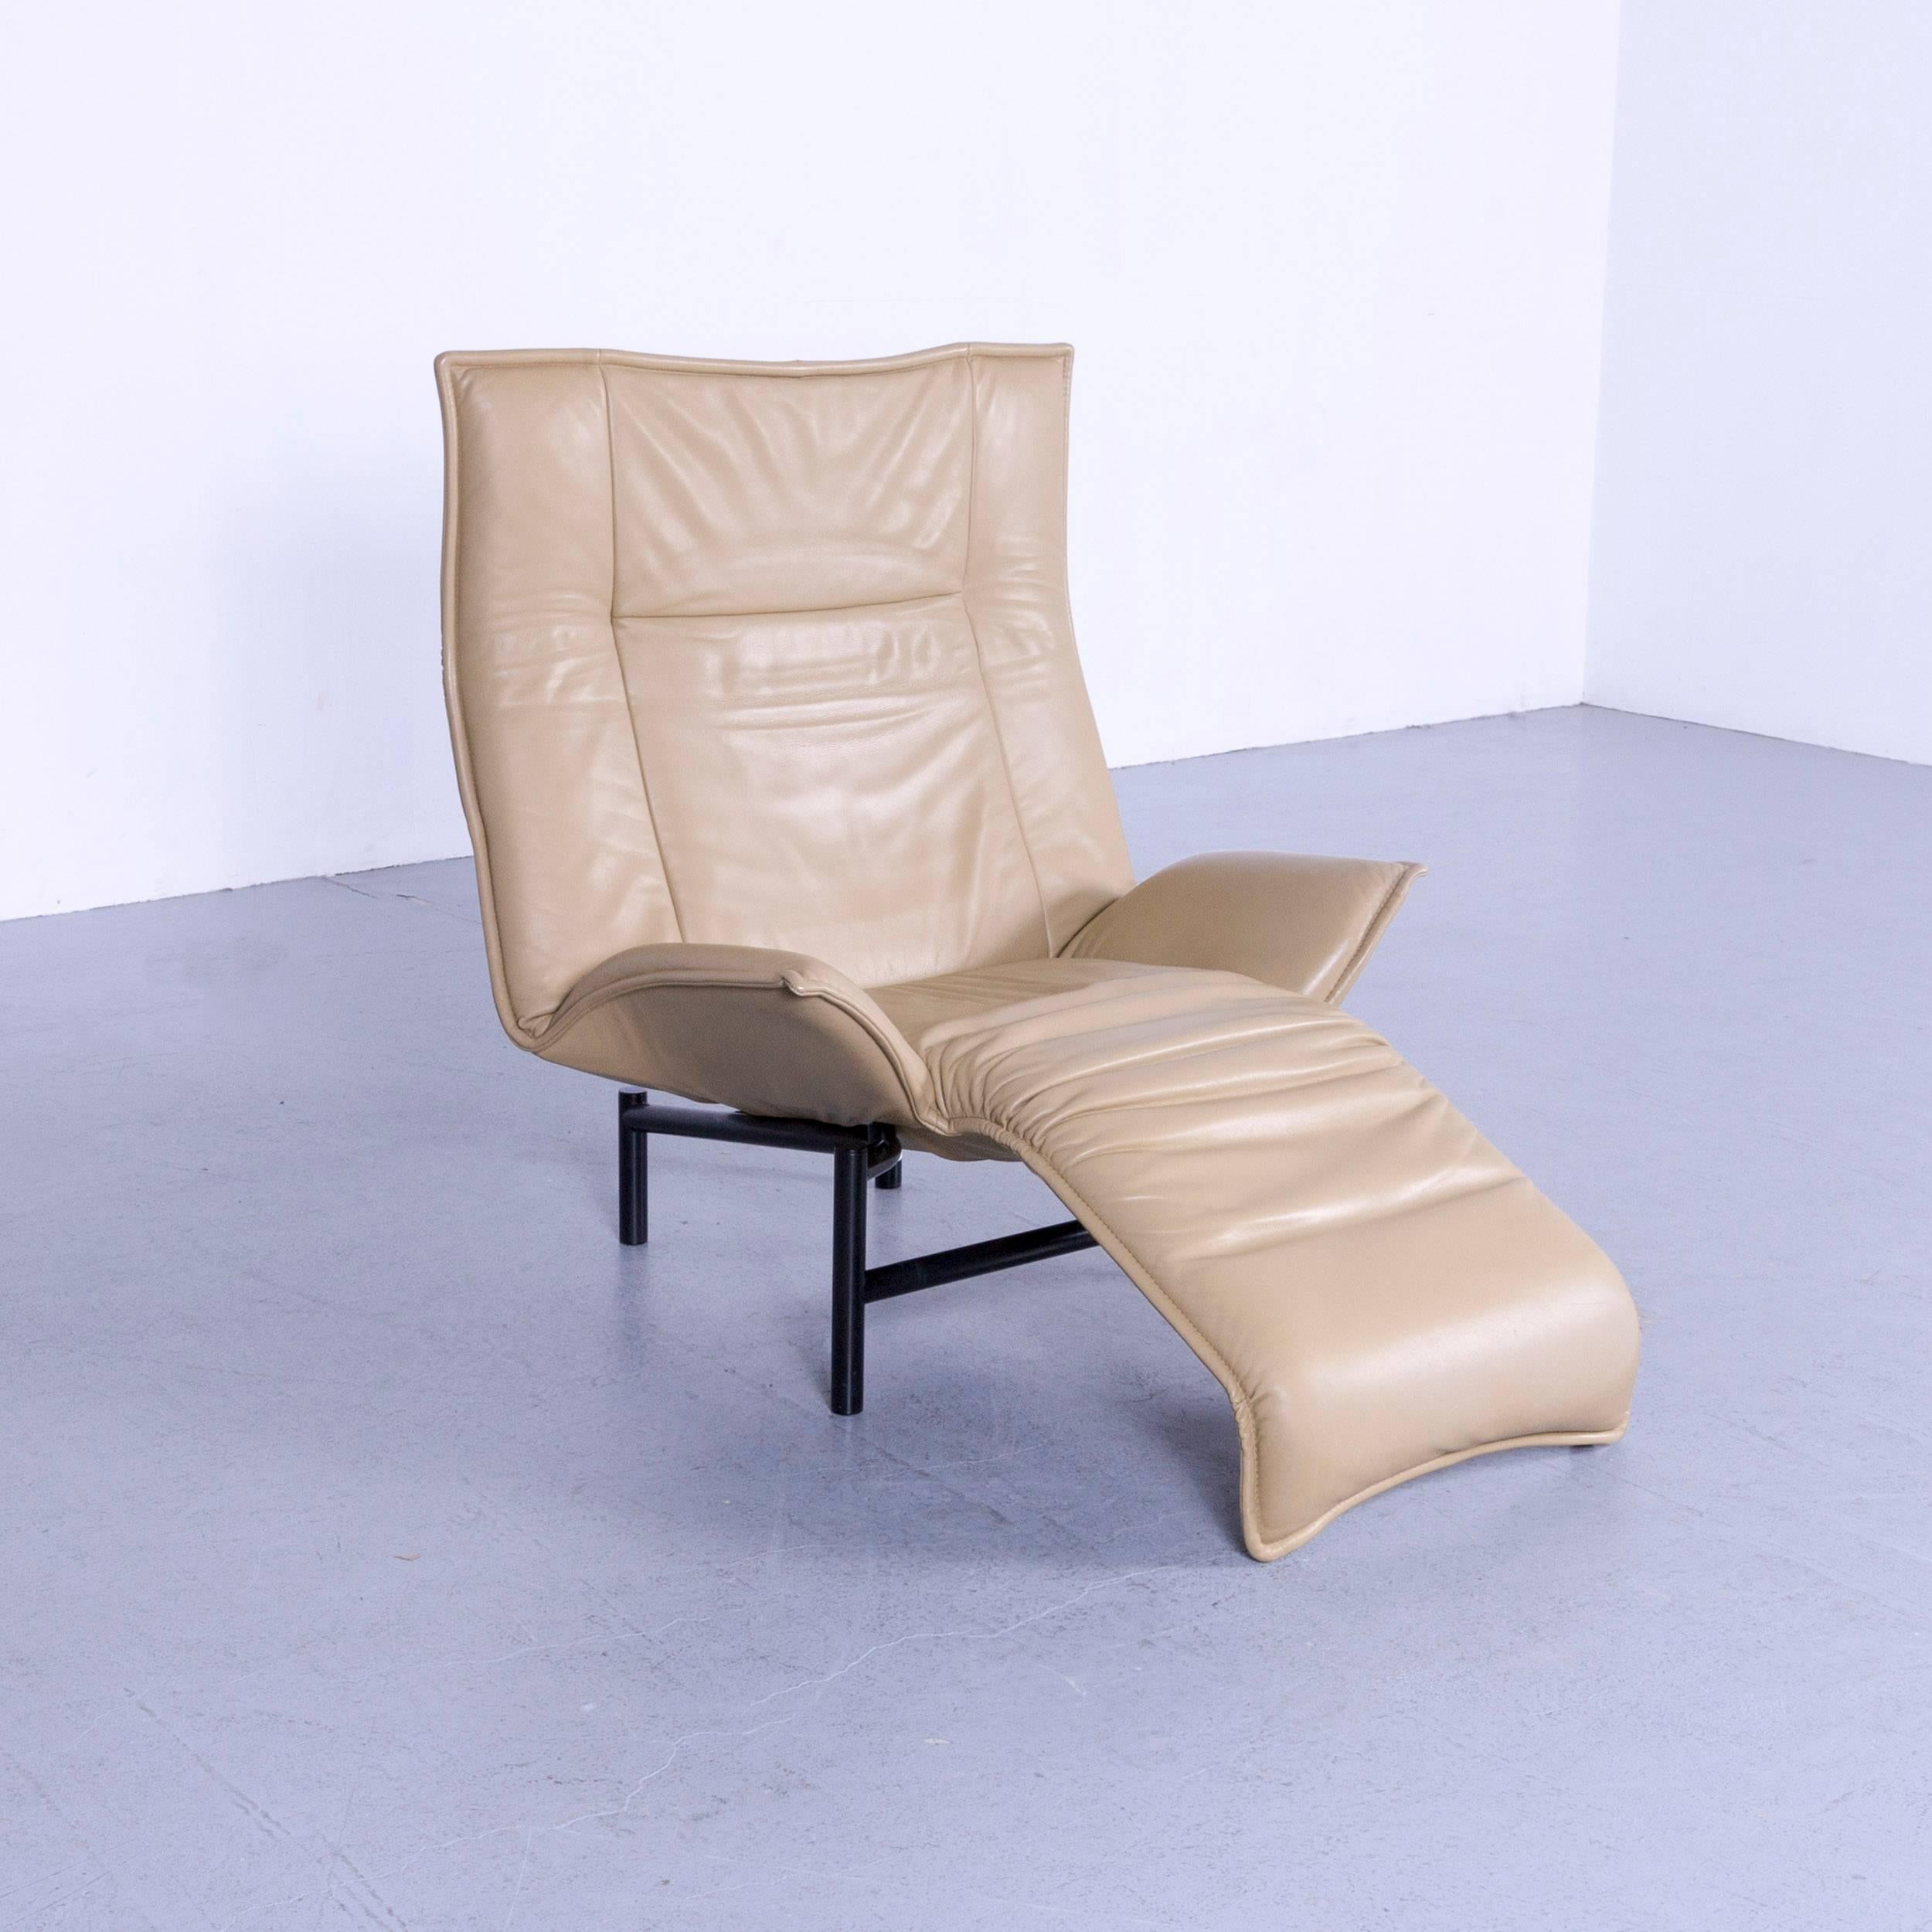 Cassina Veranda designer leather armchair in olive beige with recliner function.